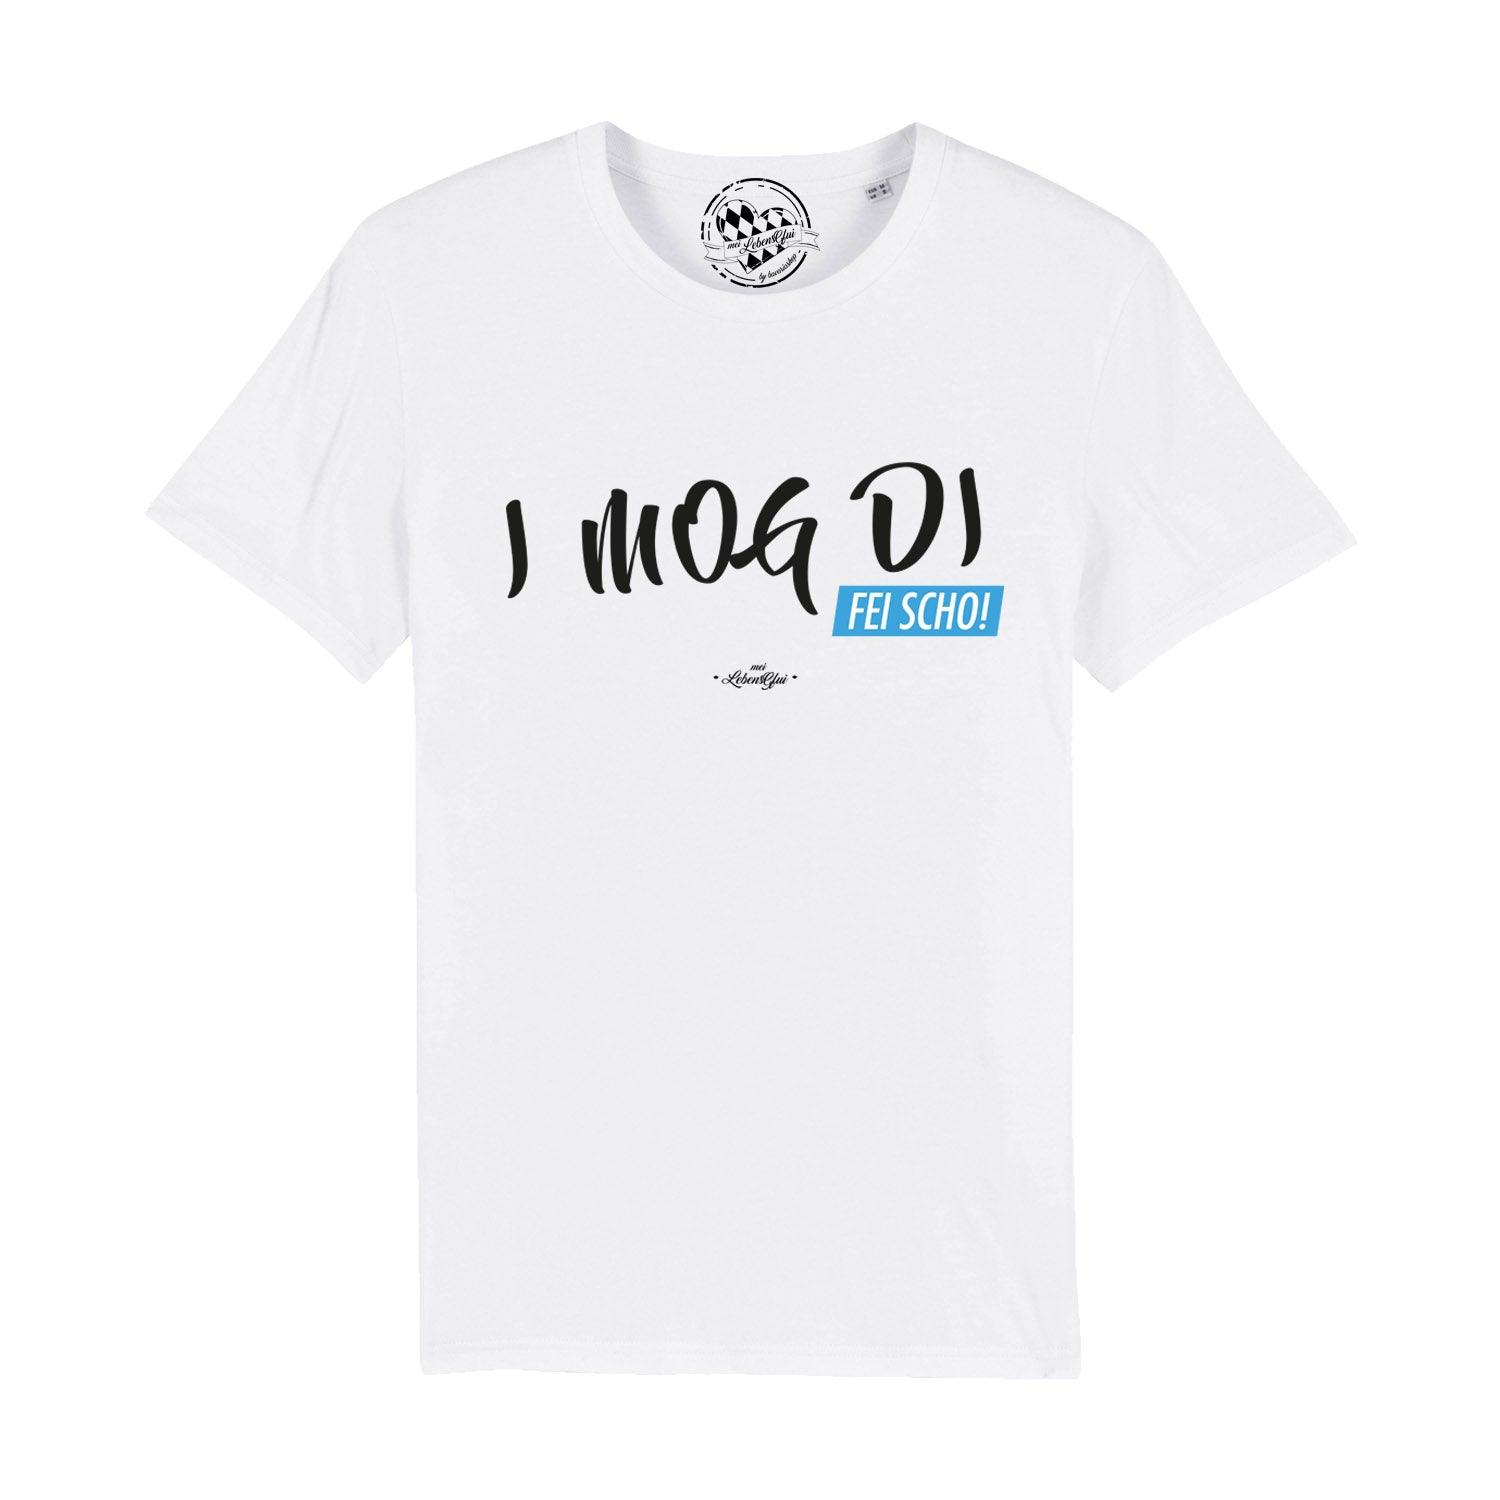 Herren T-Shirt "I MOG DI, fei scho" - bavariashop - mei LebensGfui